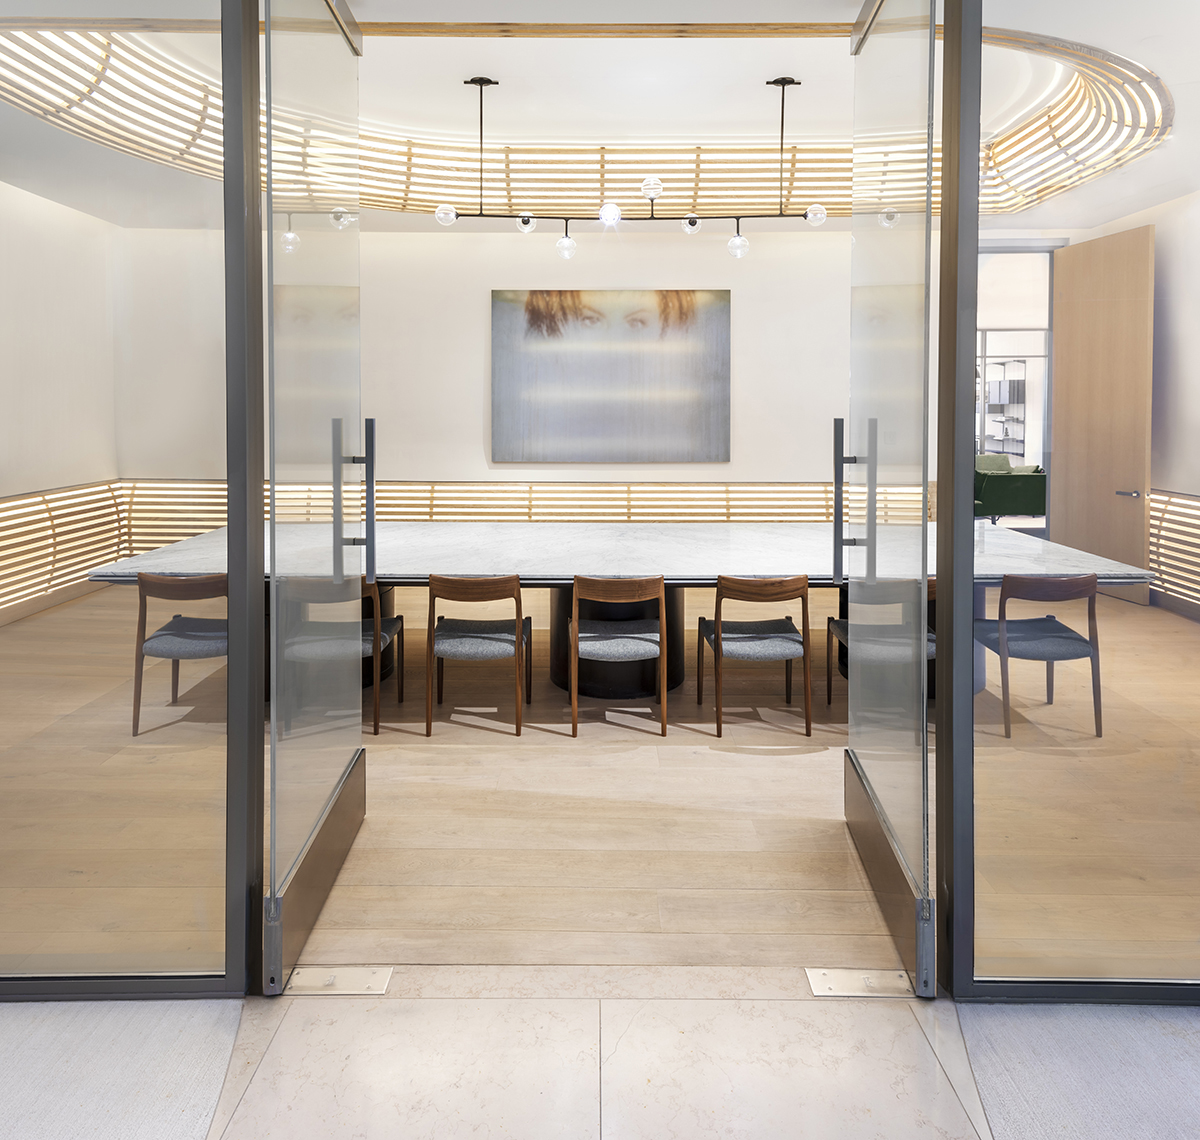 Luxury meeting room with contemporary interiros